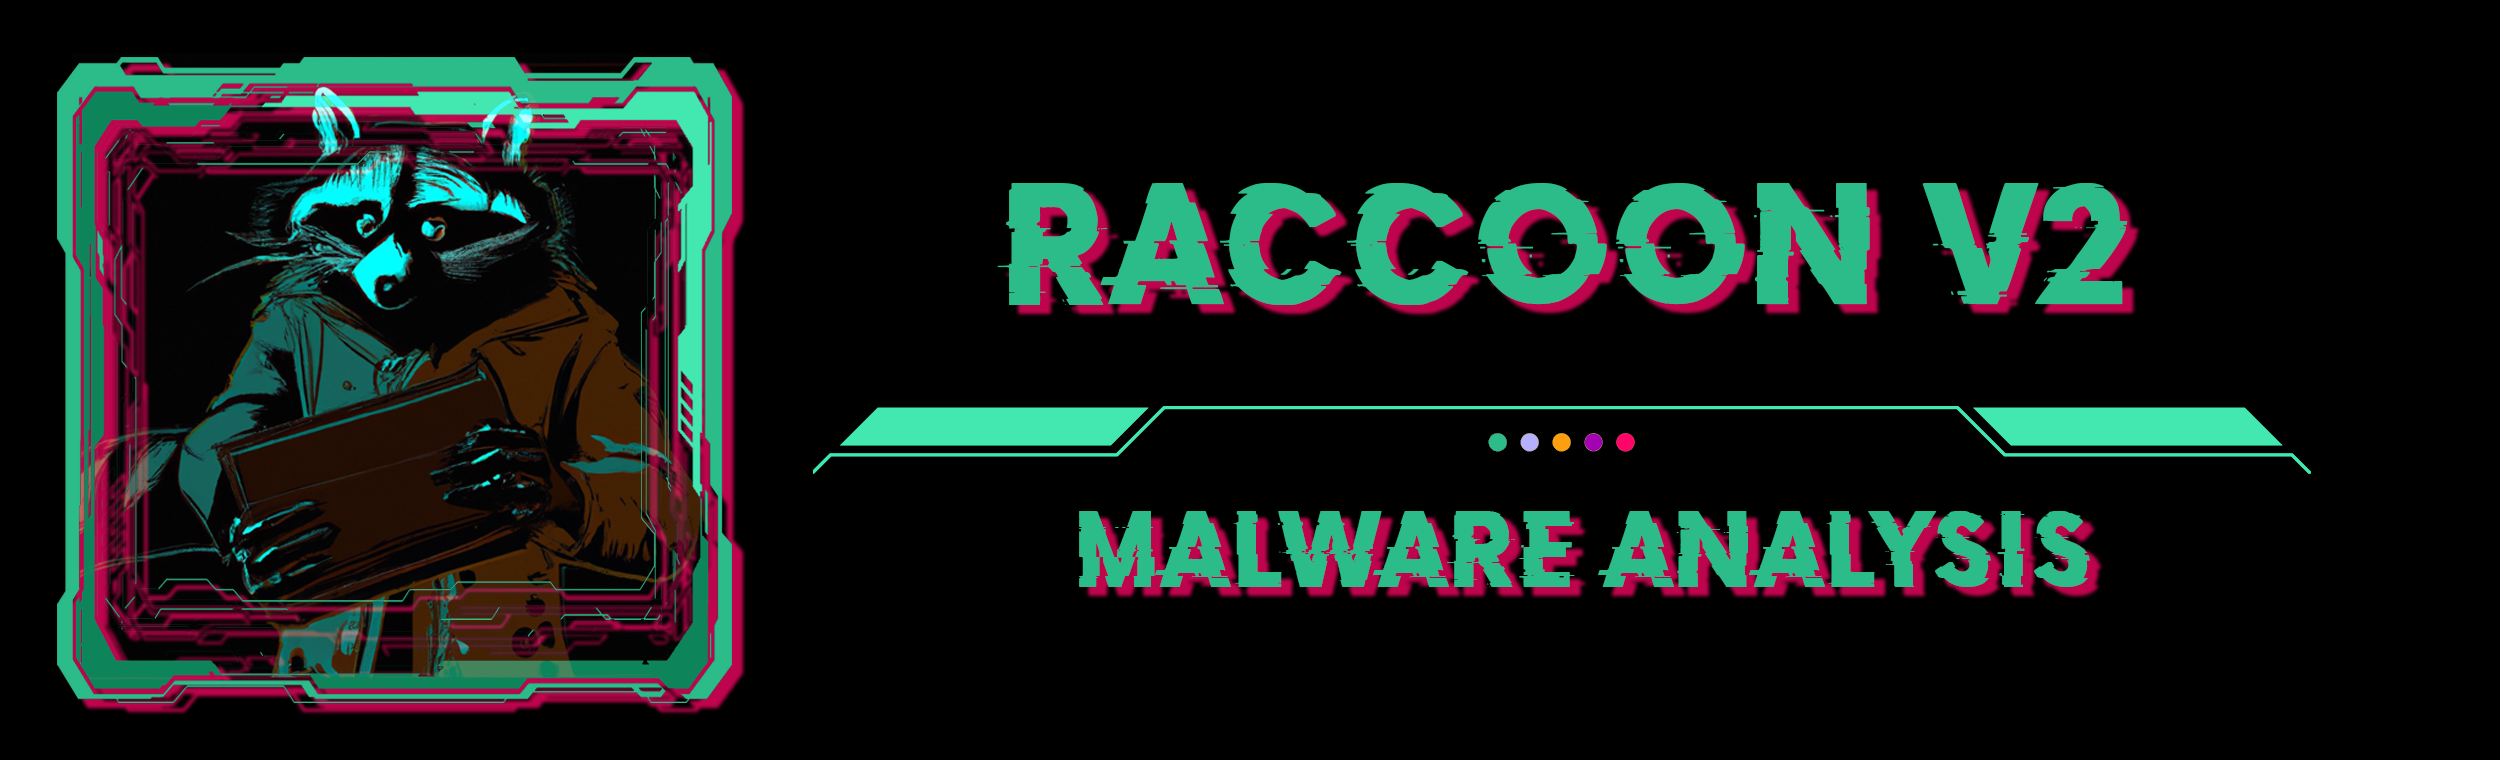 RecordBreaker | RaccoonV2